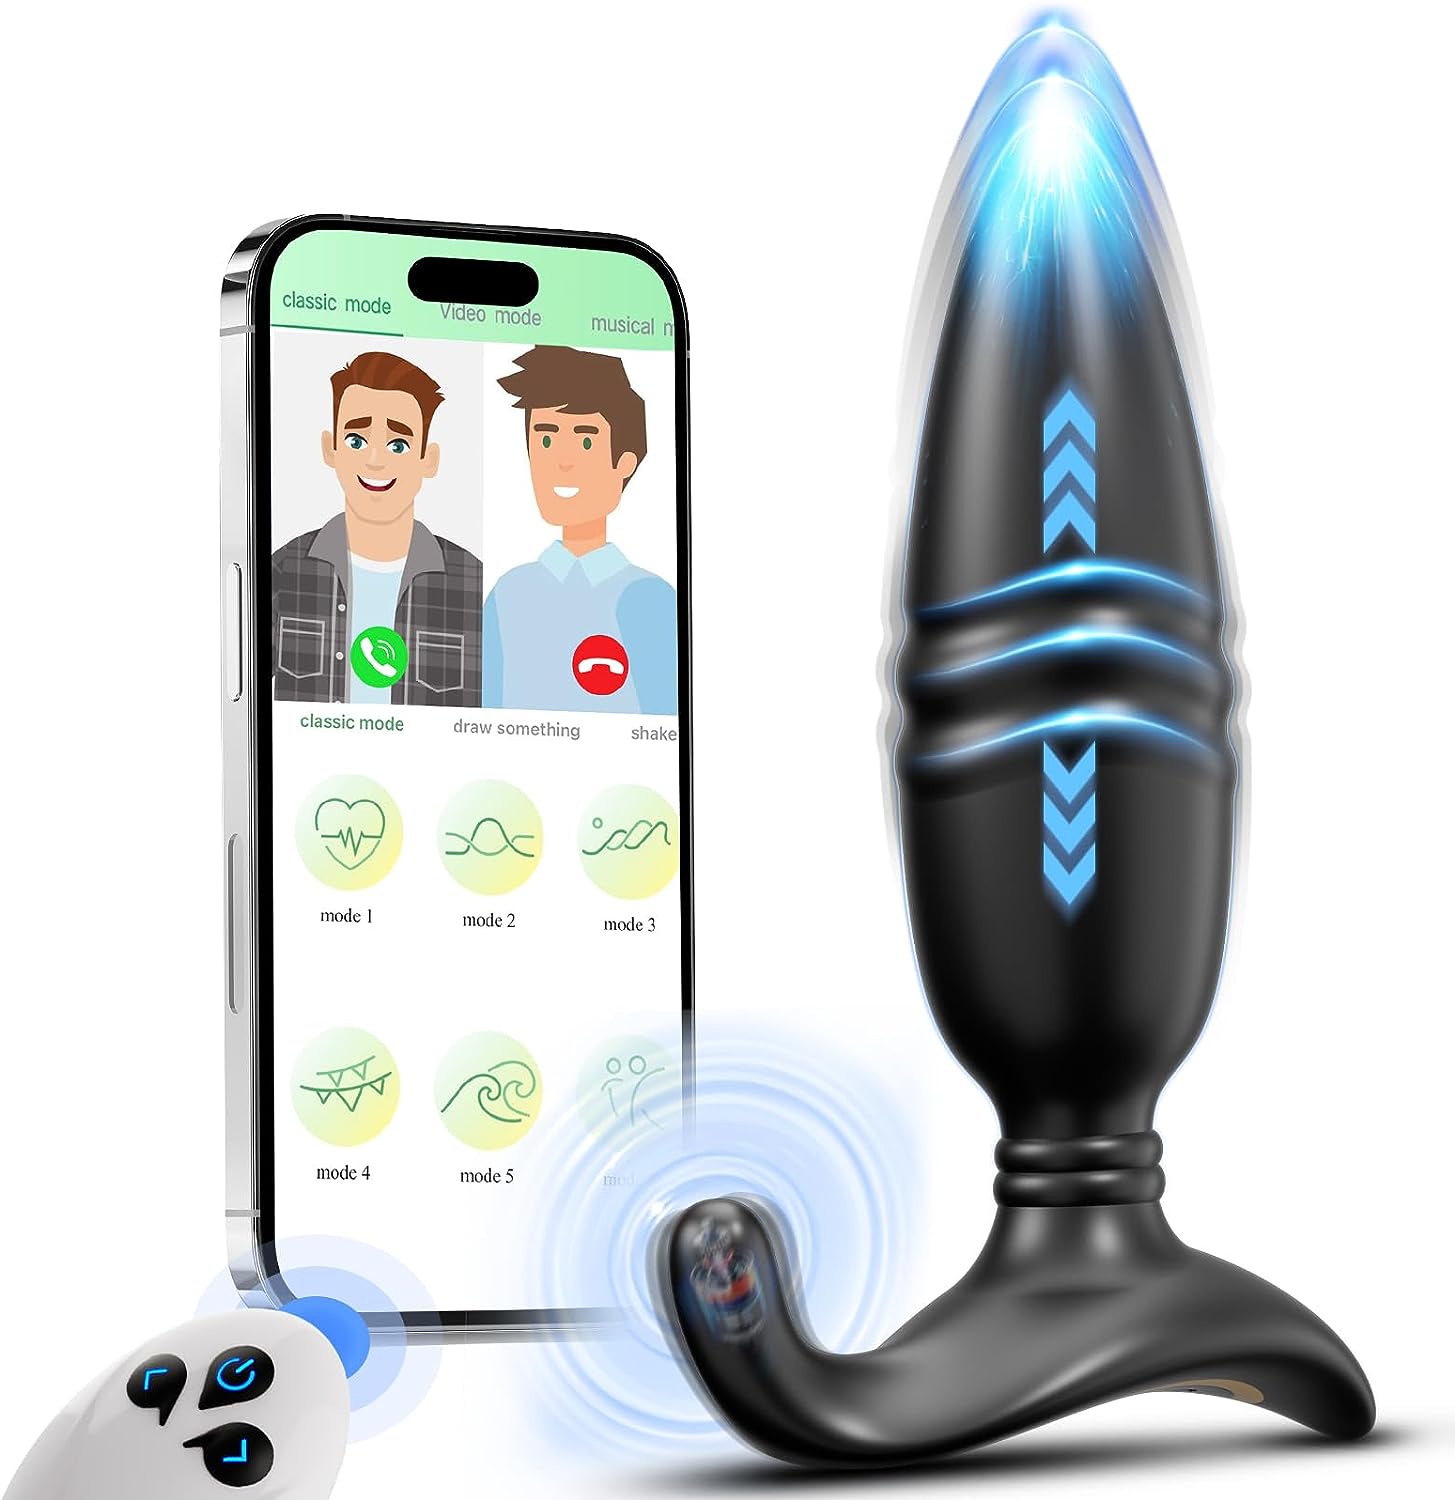 App & Remote Control Thrusting Anal Vibrator Prostate Massager